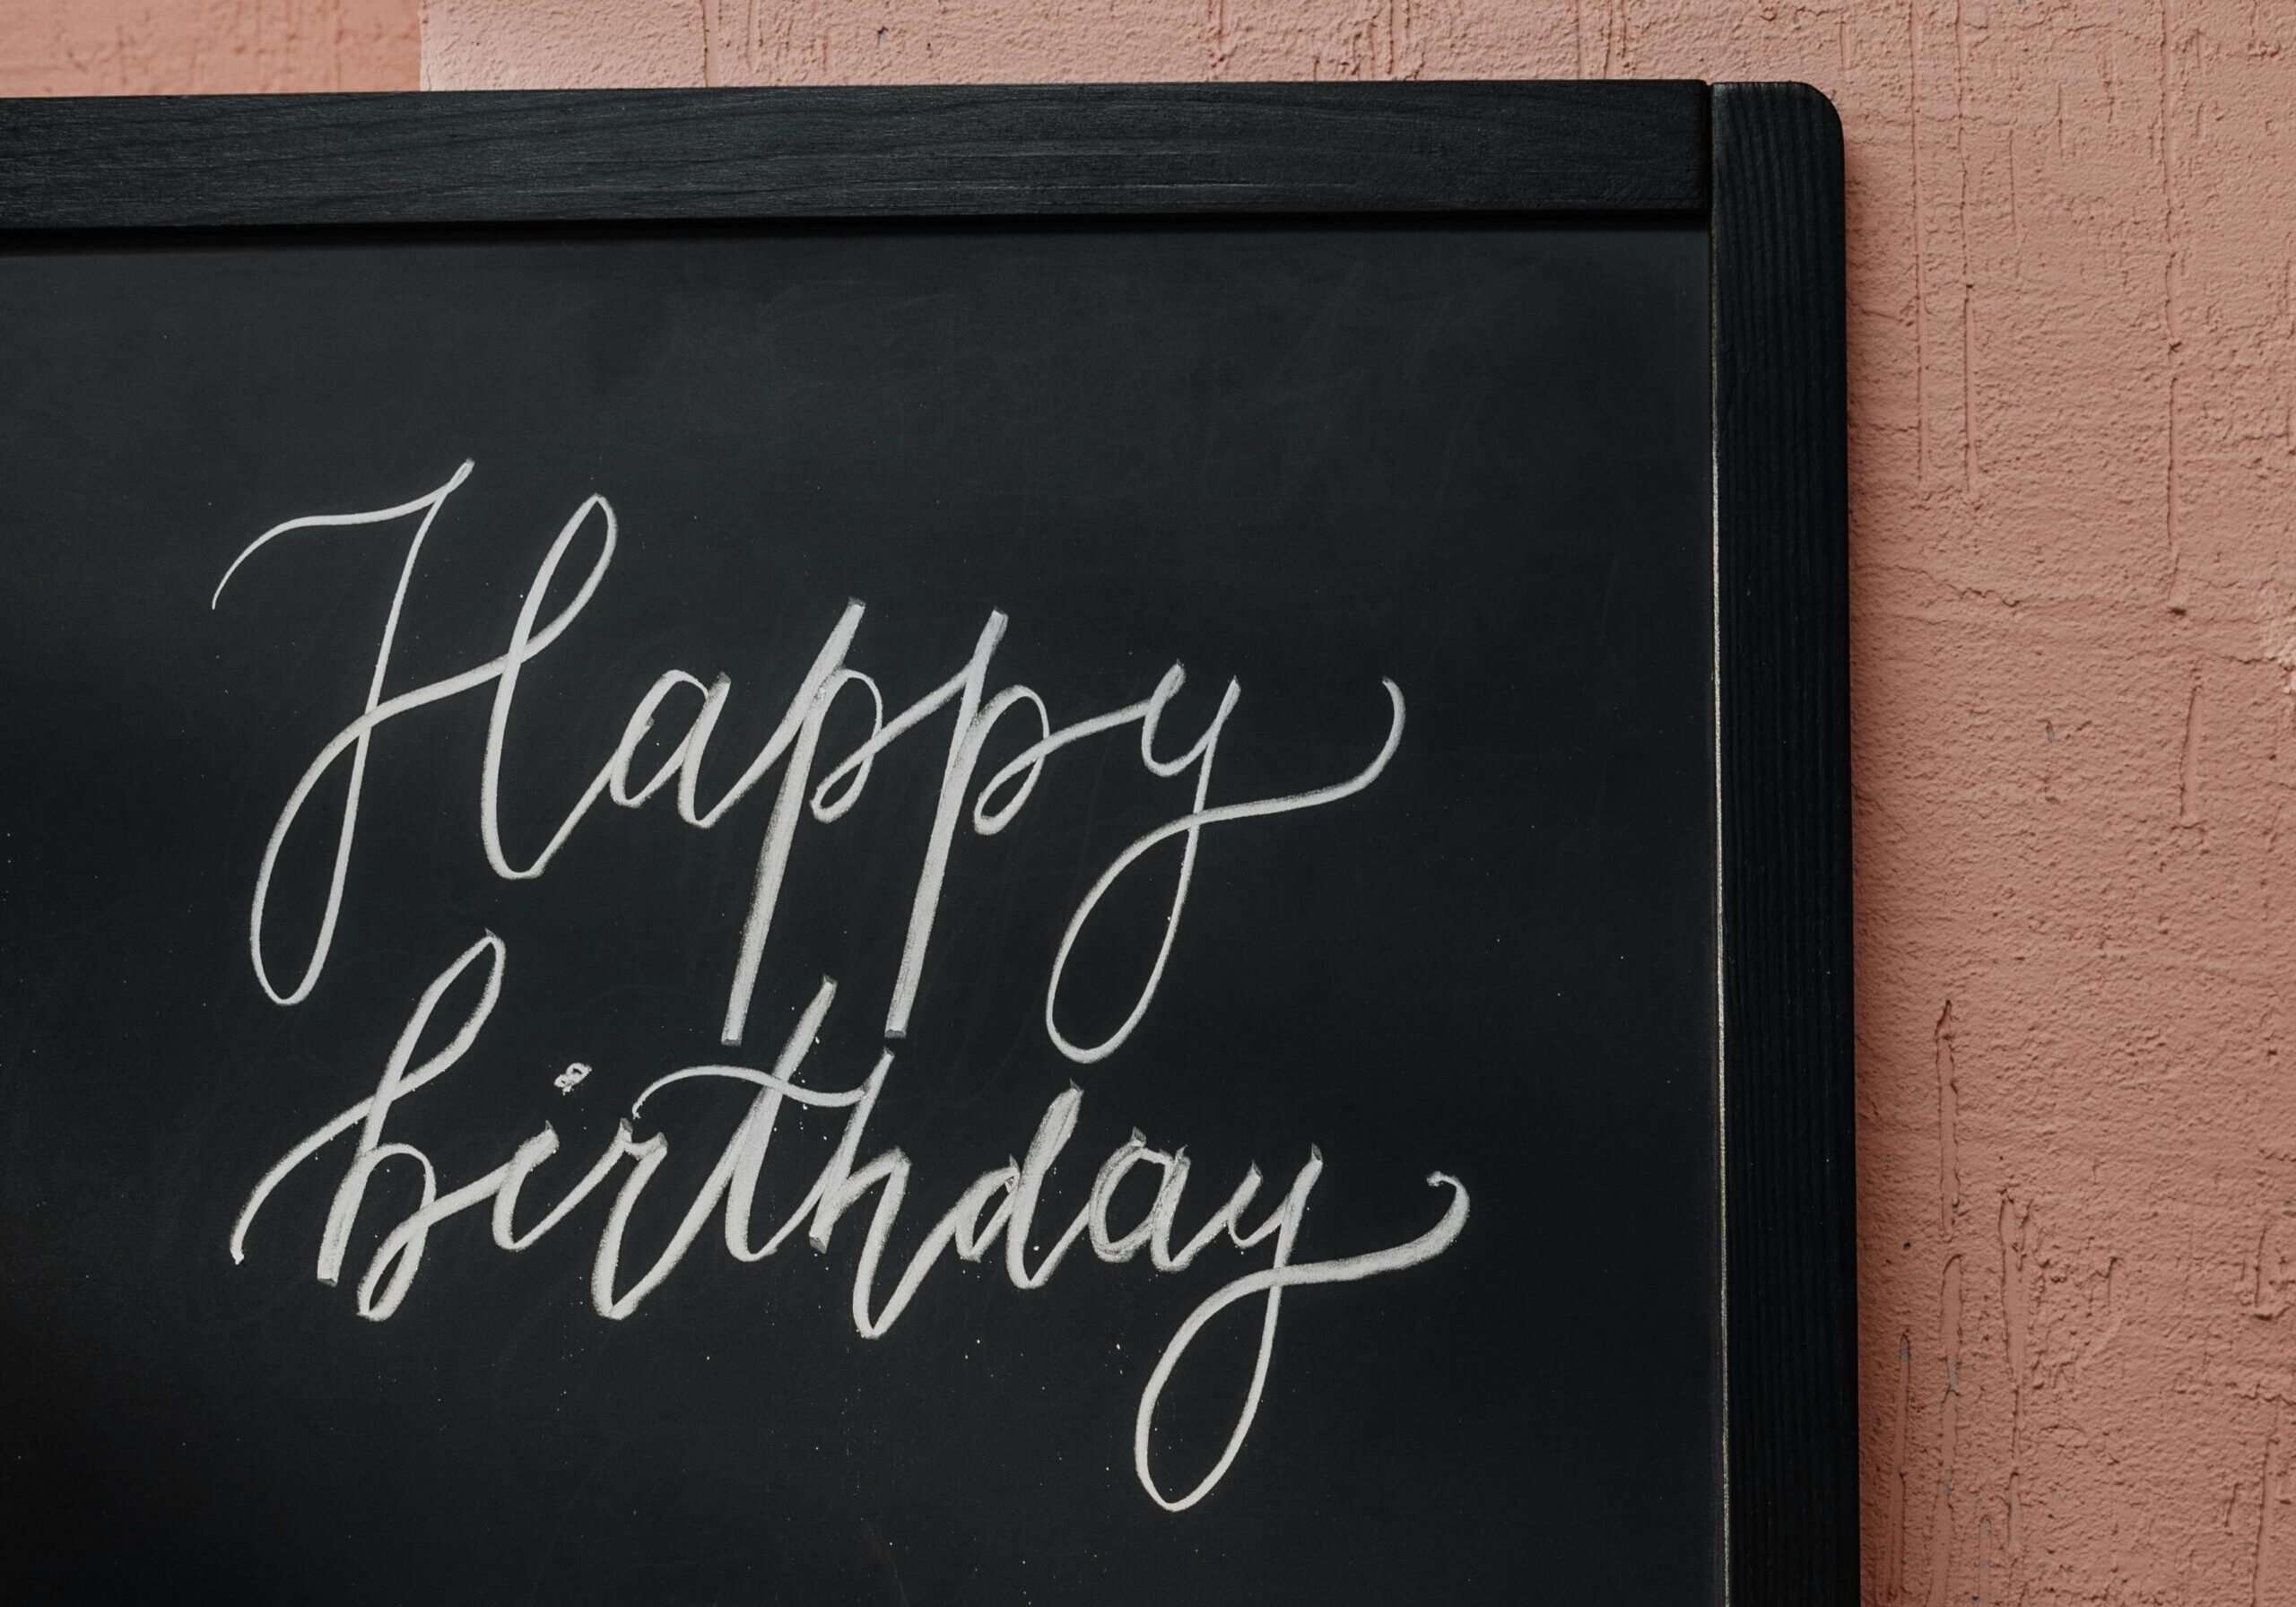 Image of "Happy Birthday" written in cursive on a black chalkboard.